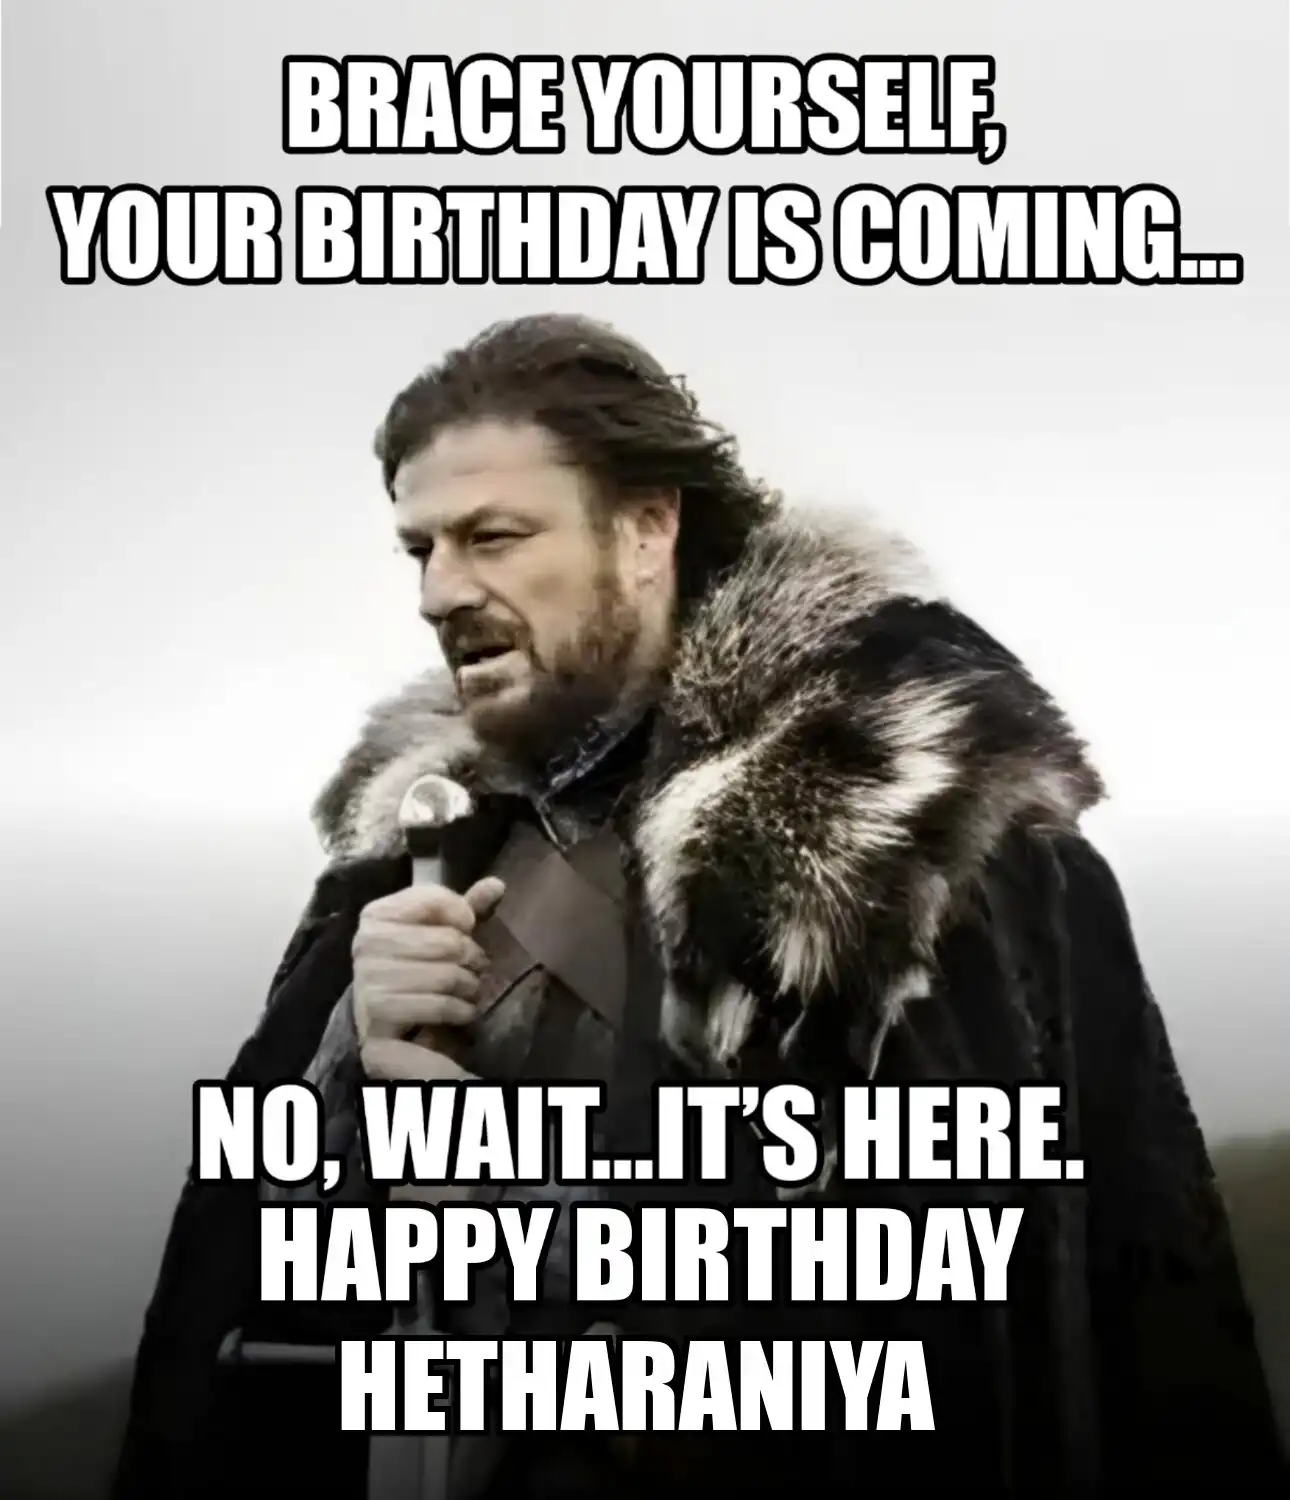 Happy Birthday Hetharaniya Brace Yourself Your Birthday Is Coming Meme